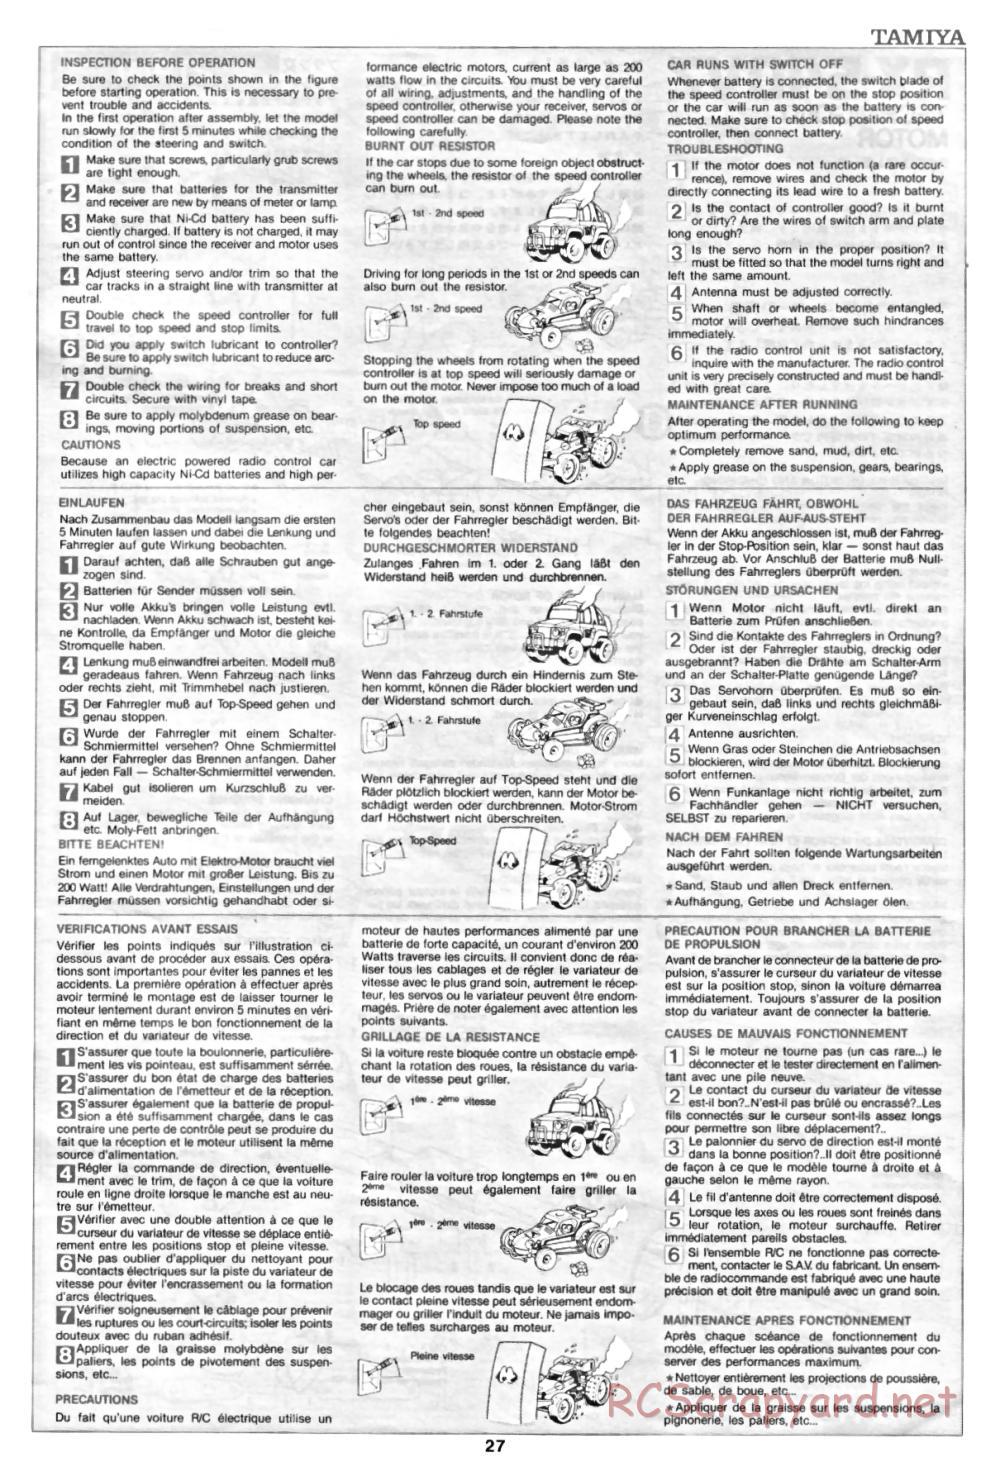 Tamiya - Porsche 959 - 58059 - Manual - Page 27